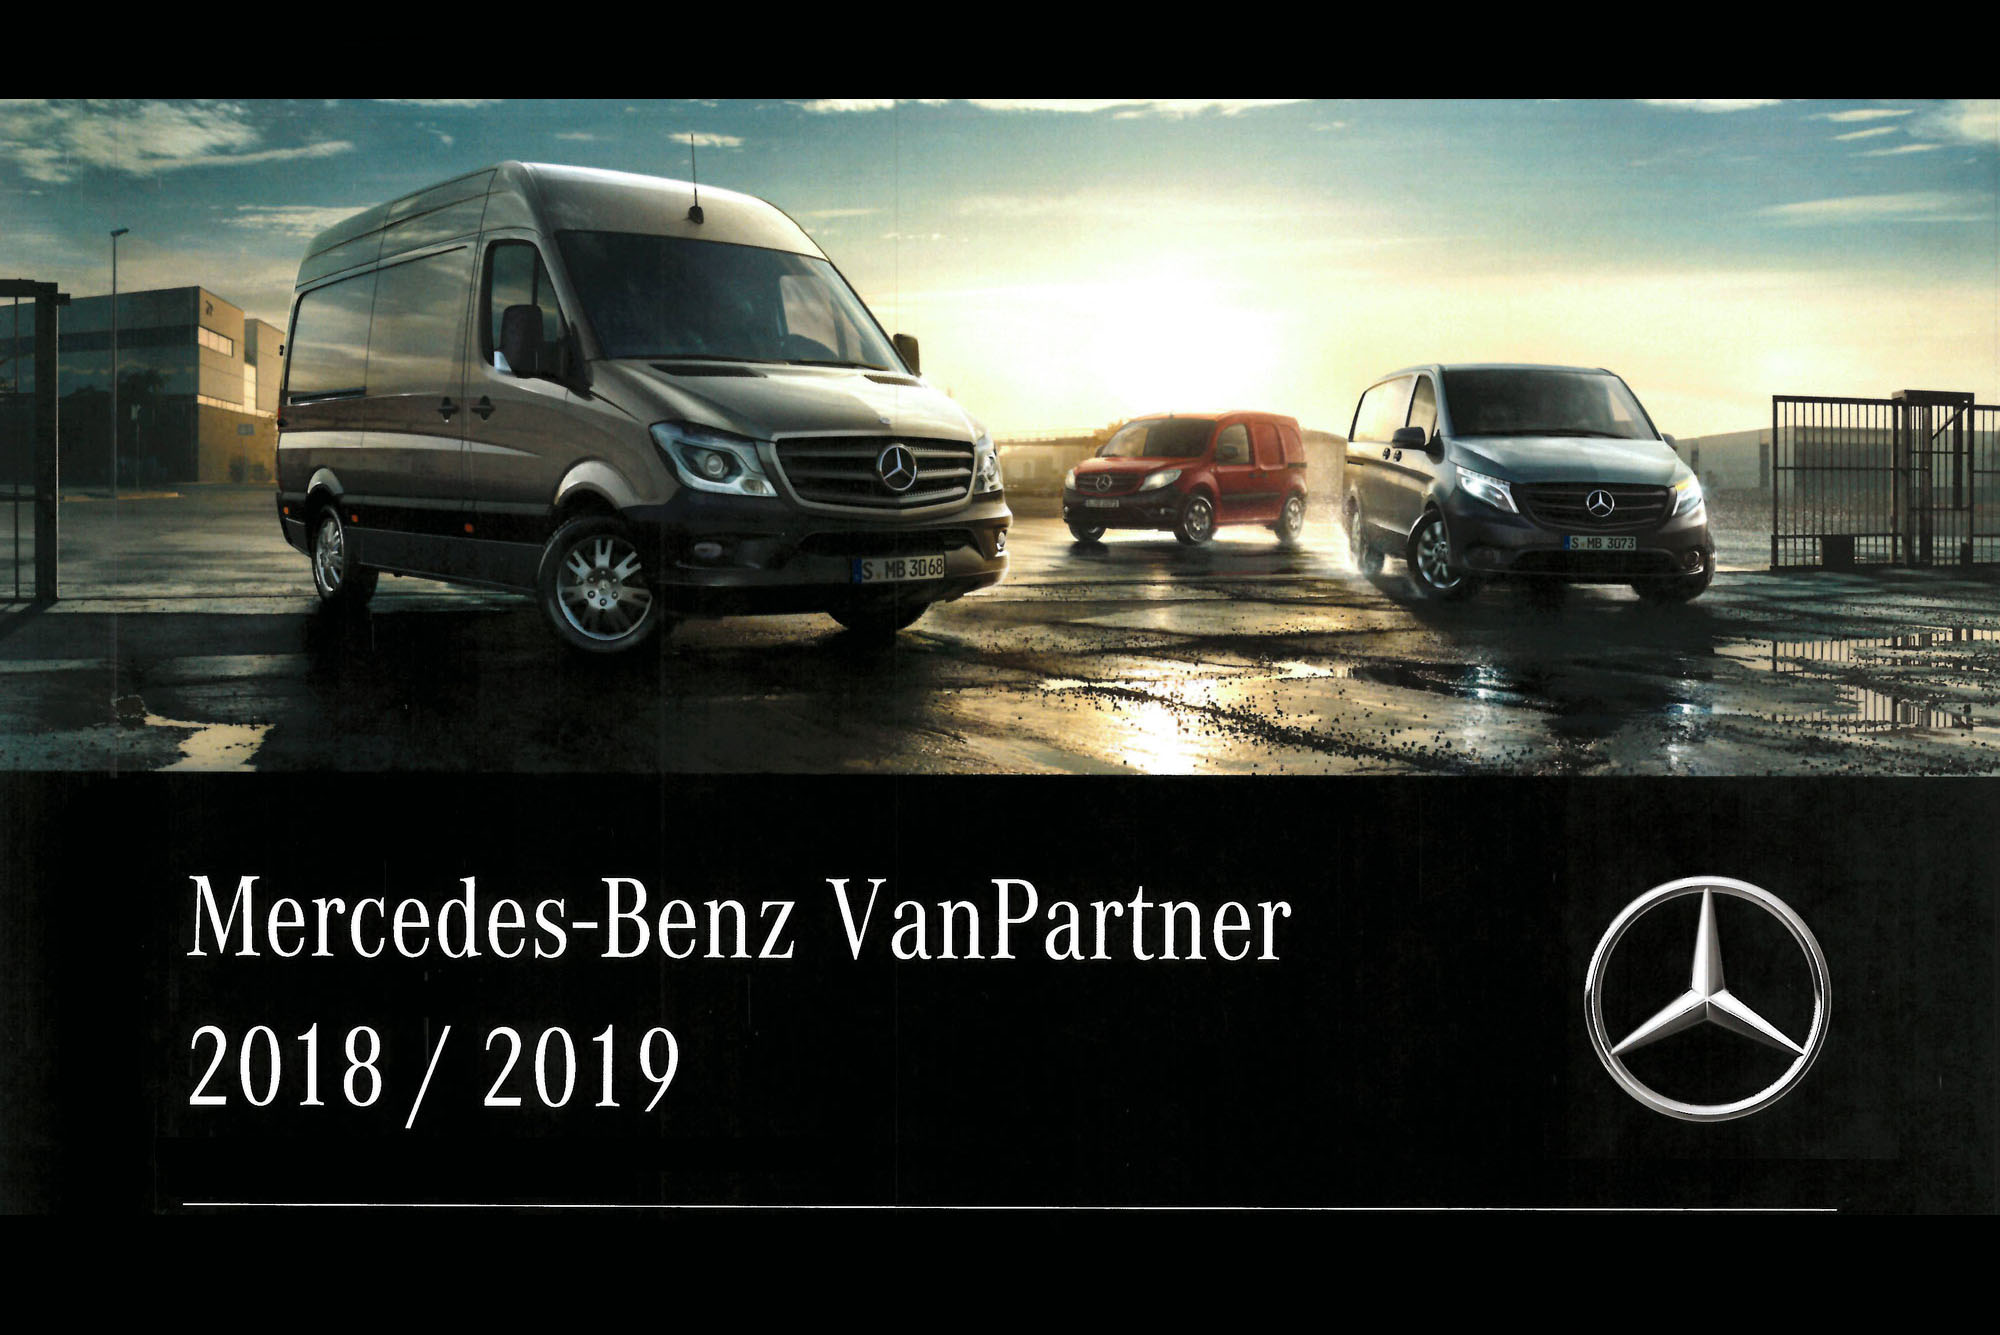 Modul-System awarded a renewed international Van Partner Certificate from Mercedes Benz